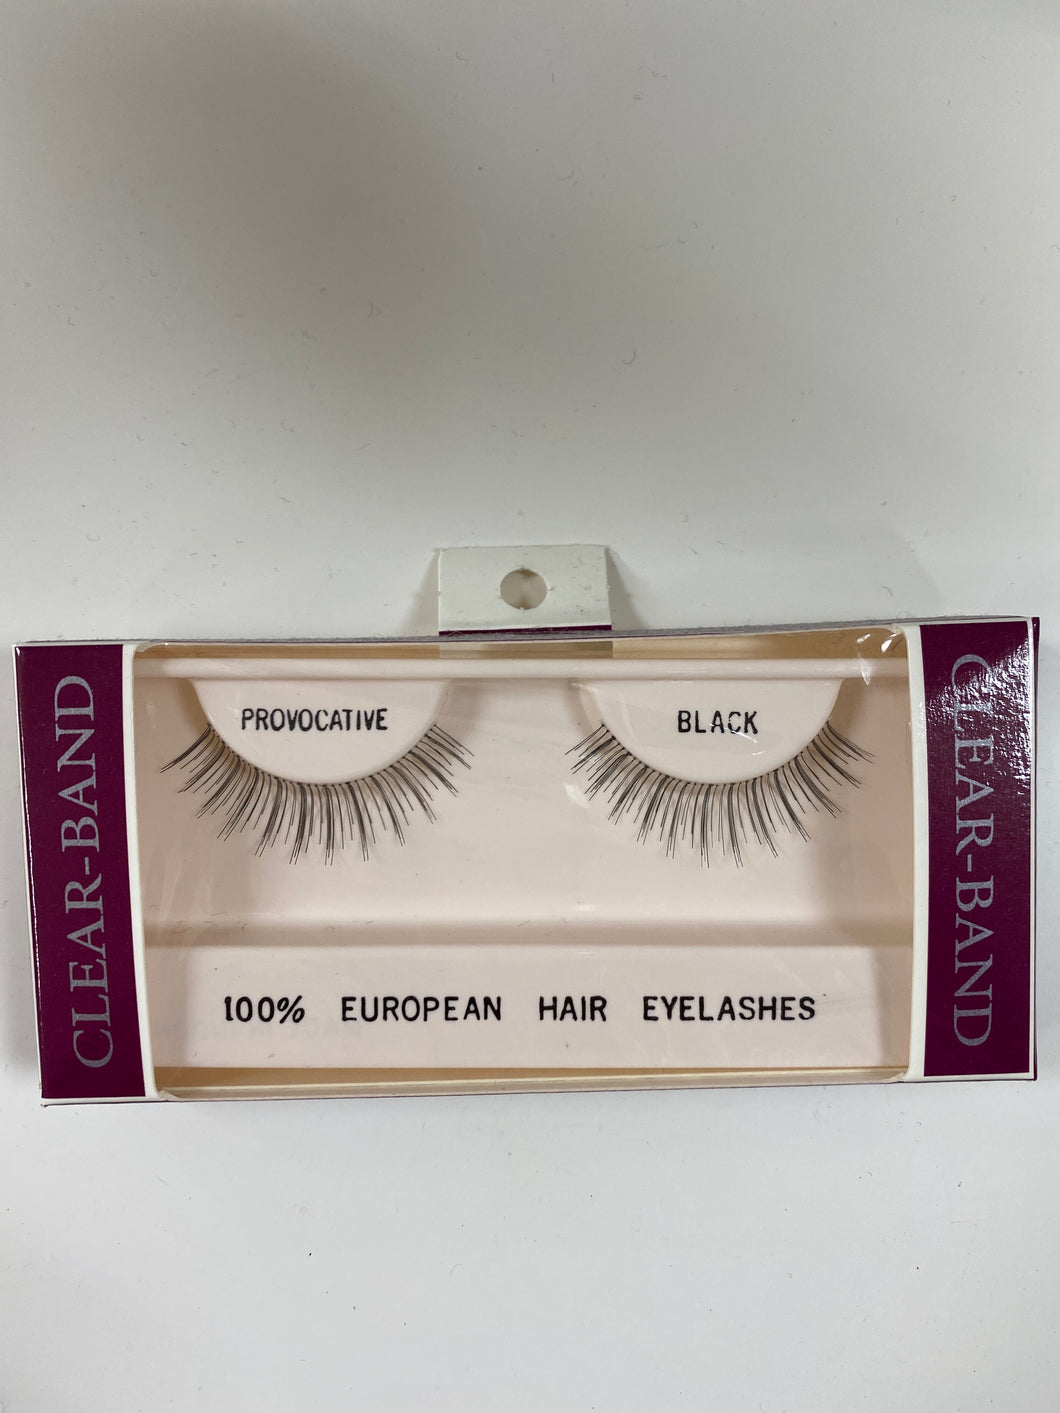 Beautee Sense Clear-band 100% European Hair Eyelashes - Provocative